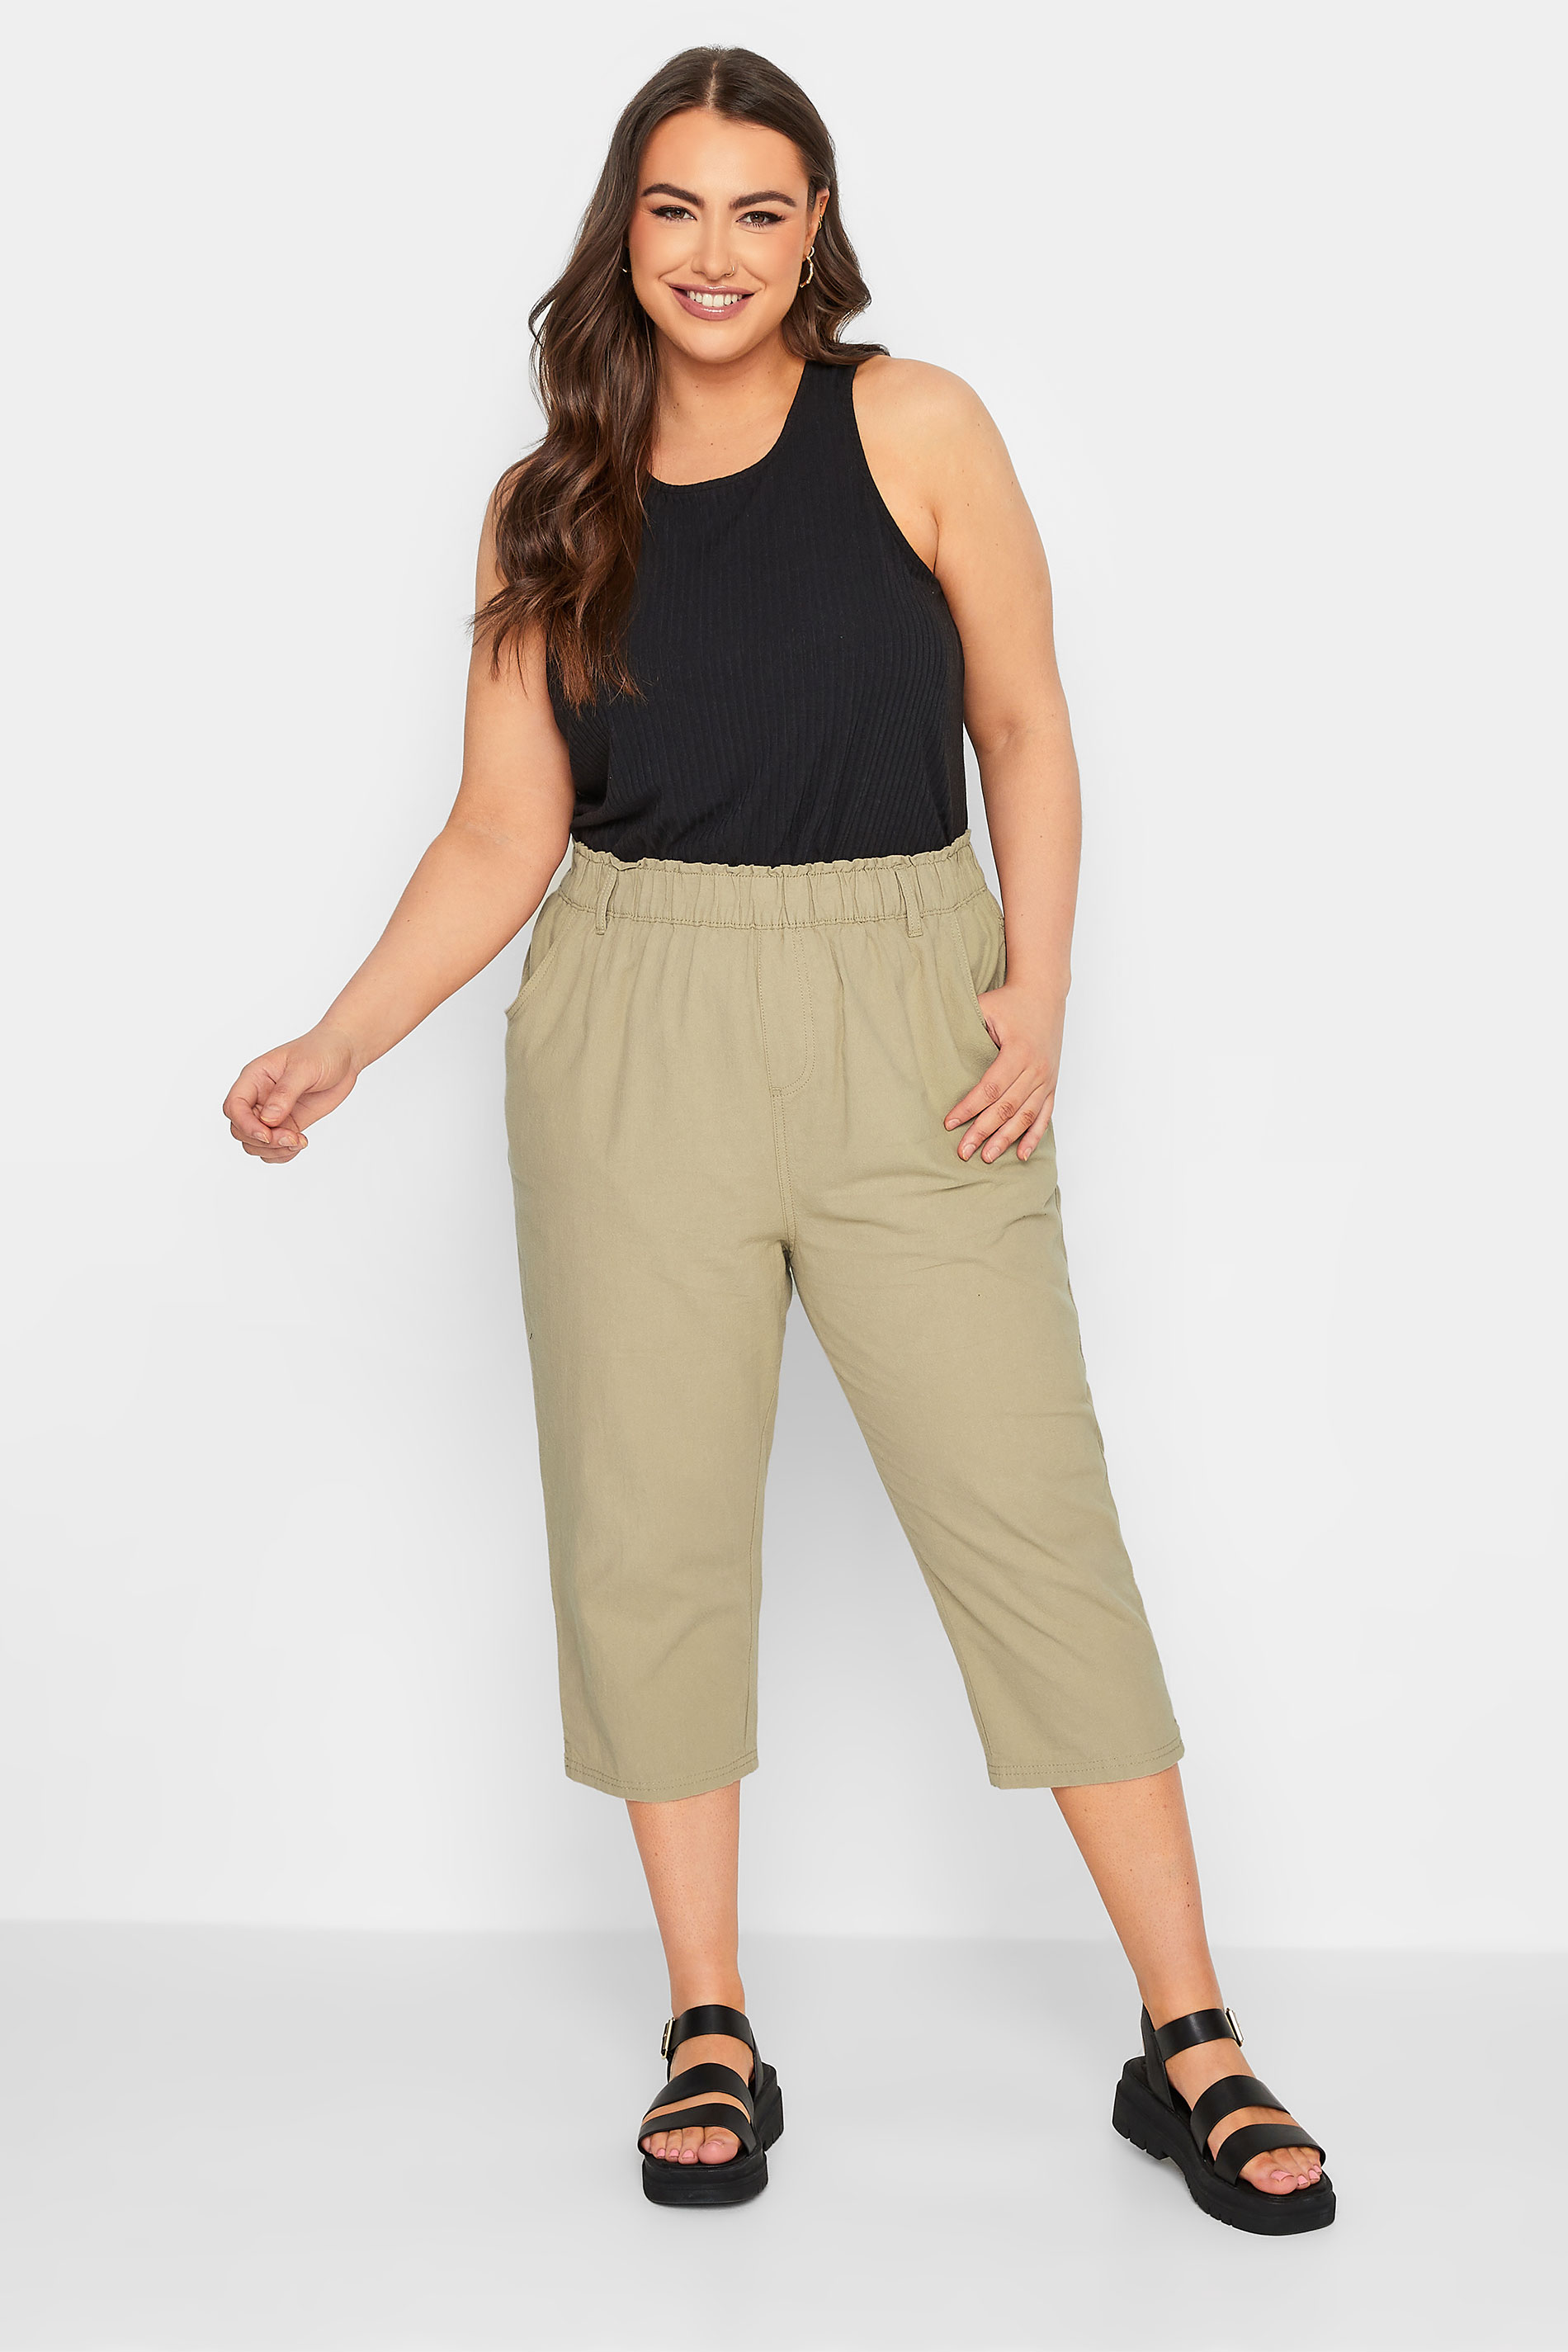 Plus Size Women's Capris & Crop Pants | Lane Bryant